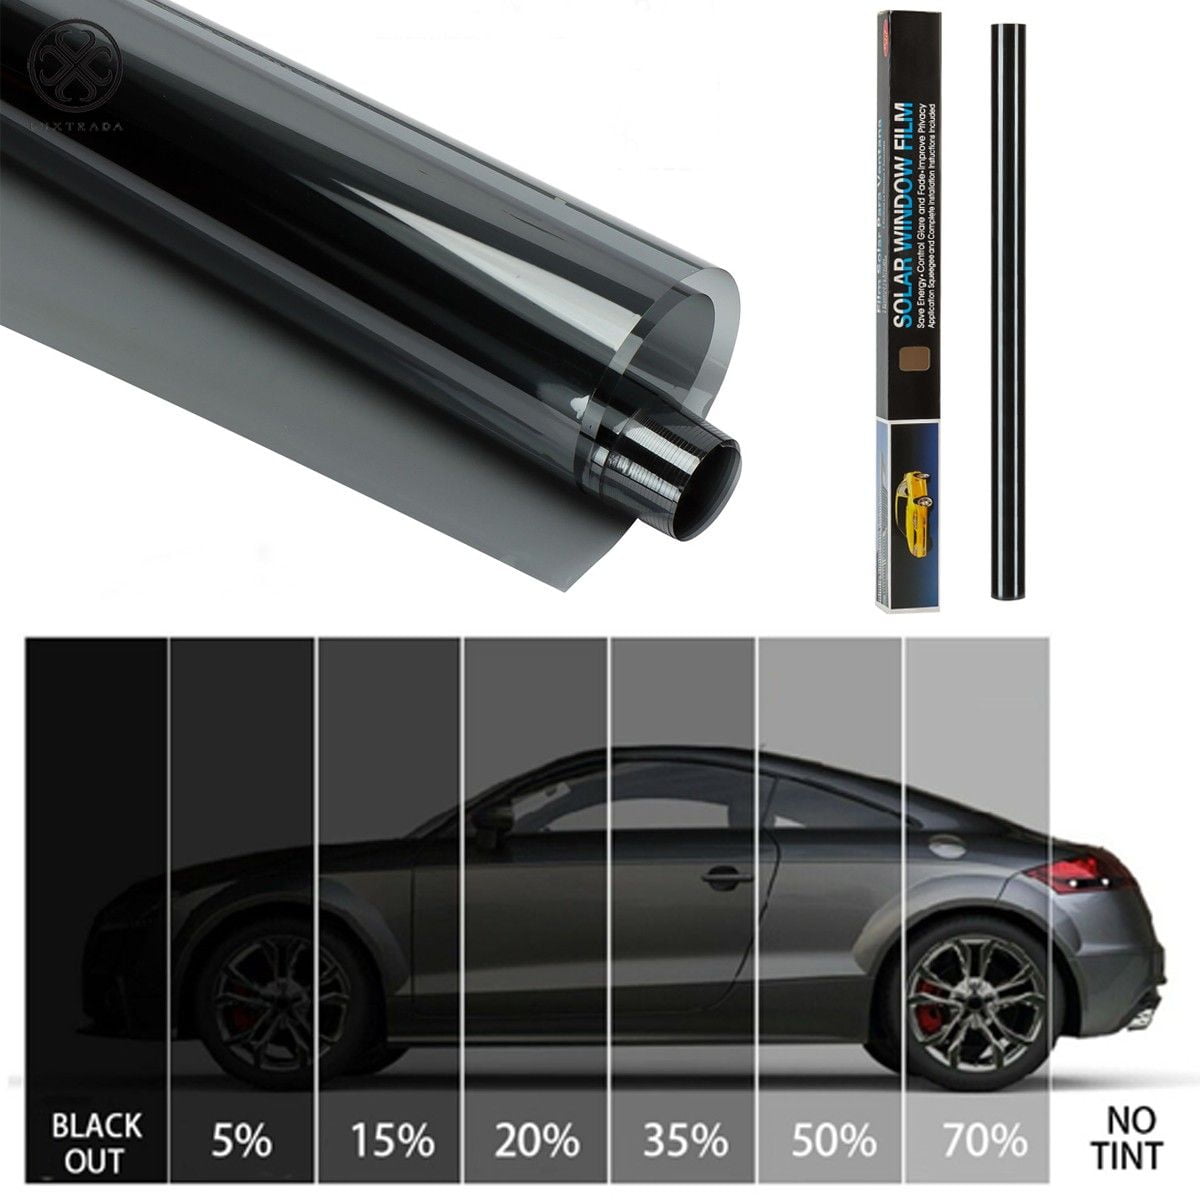 50% ULTRA LIGHT BLACK CAR WINDOW AUTO TINT, FILM FOR TINTING CARS